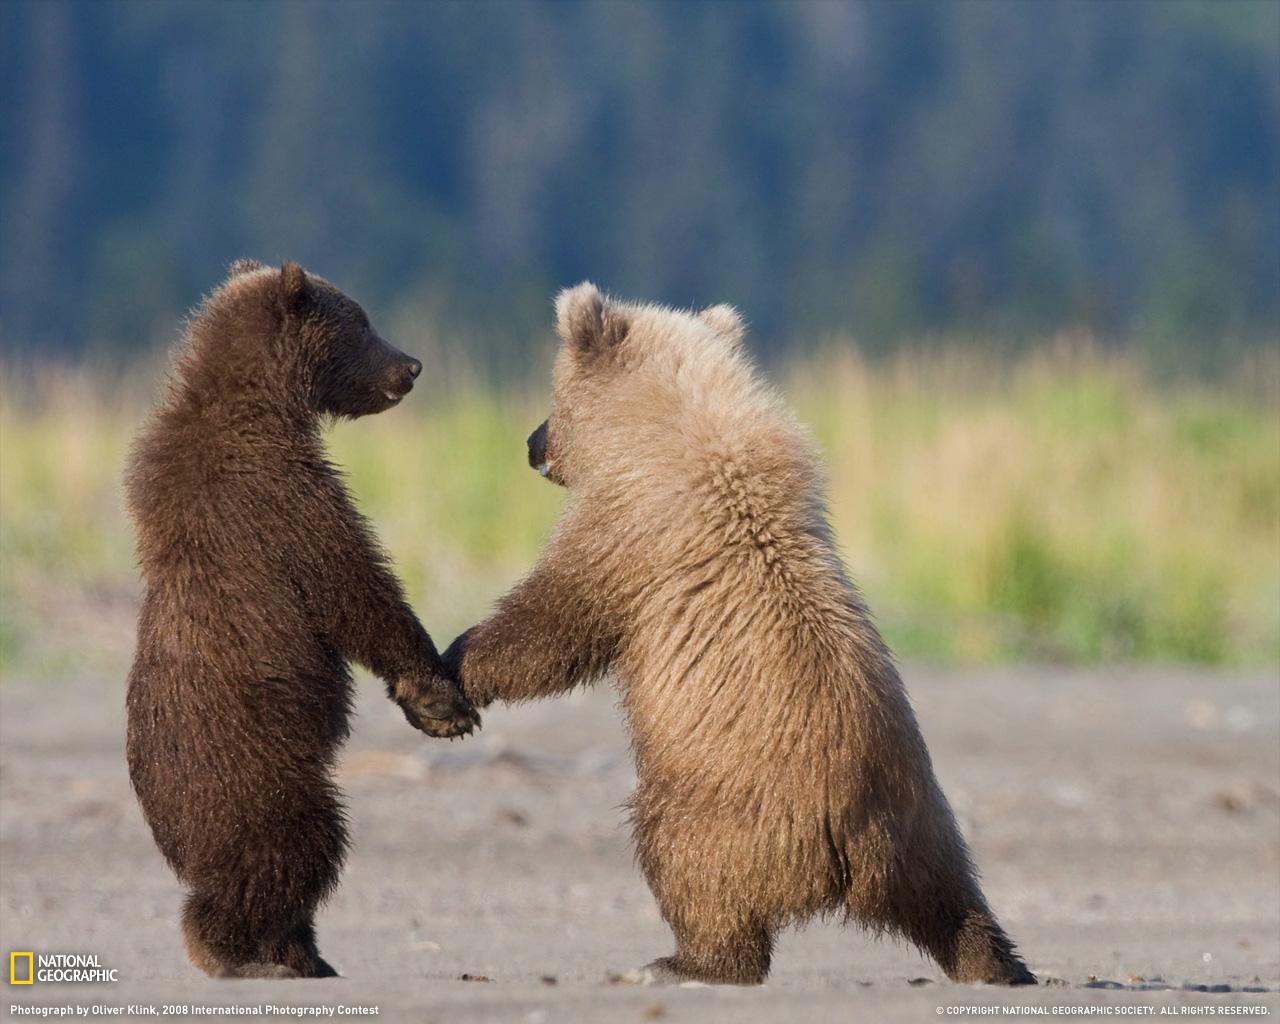 cuddly bears